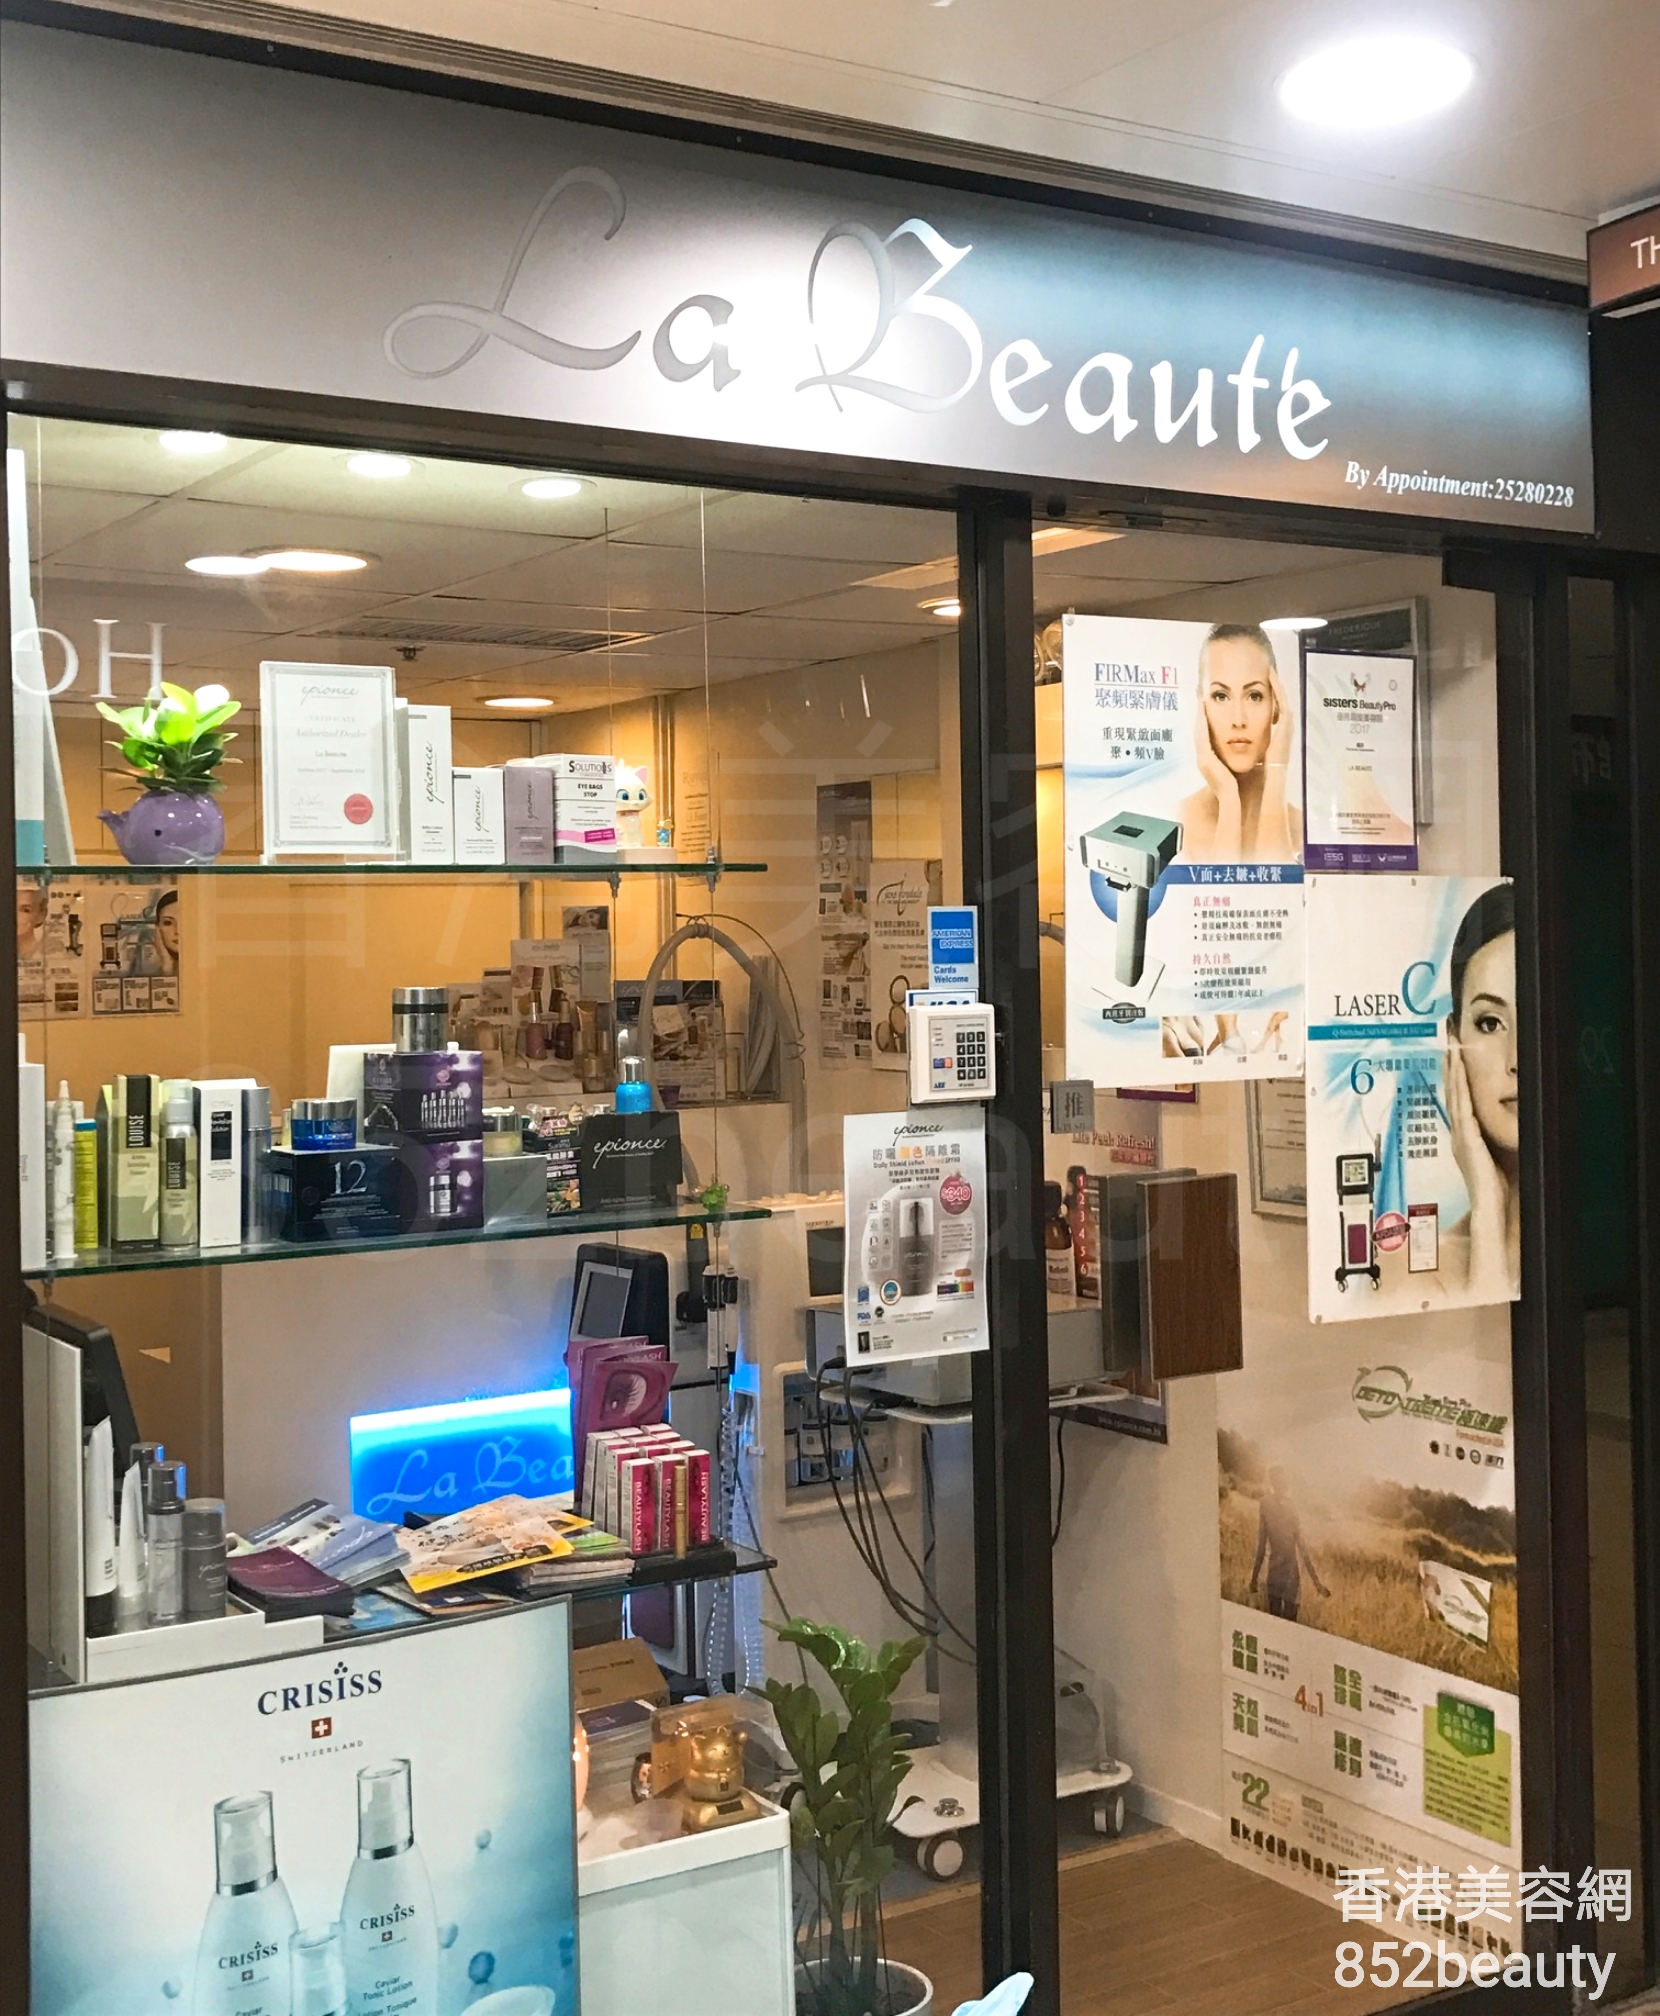 香港美容網 Hong Kong Beauty Salon 美容院 / 美容師: La Beaute